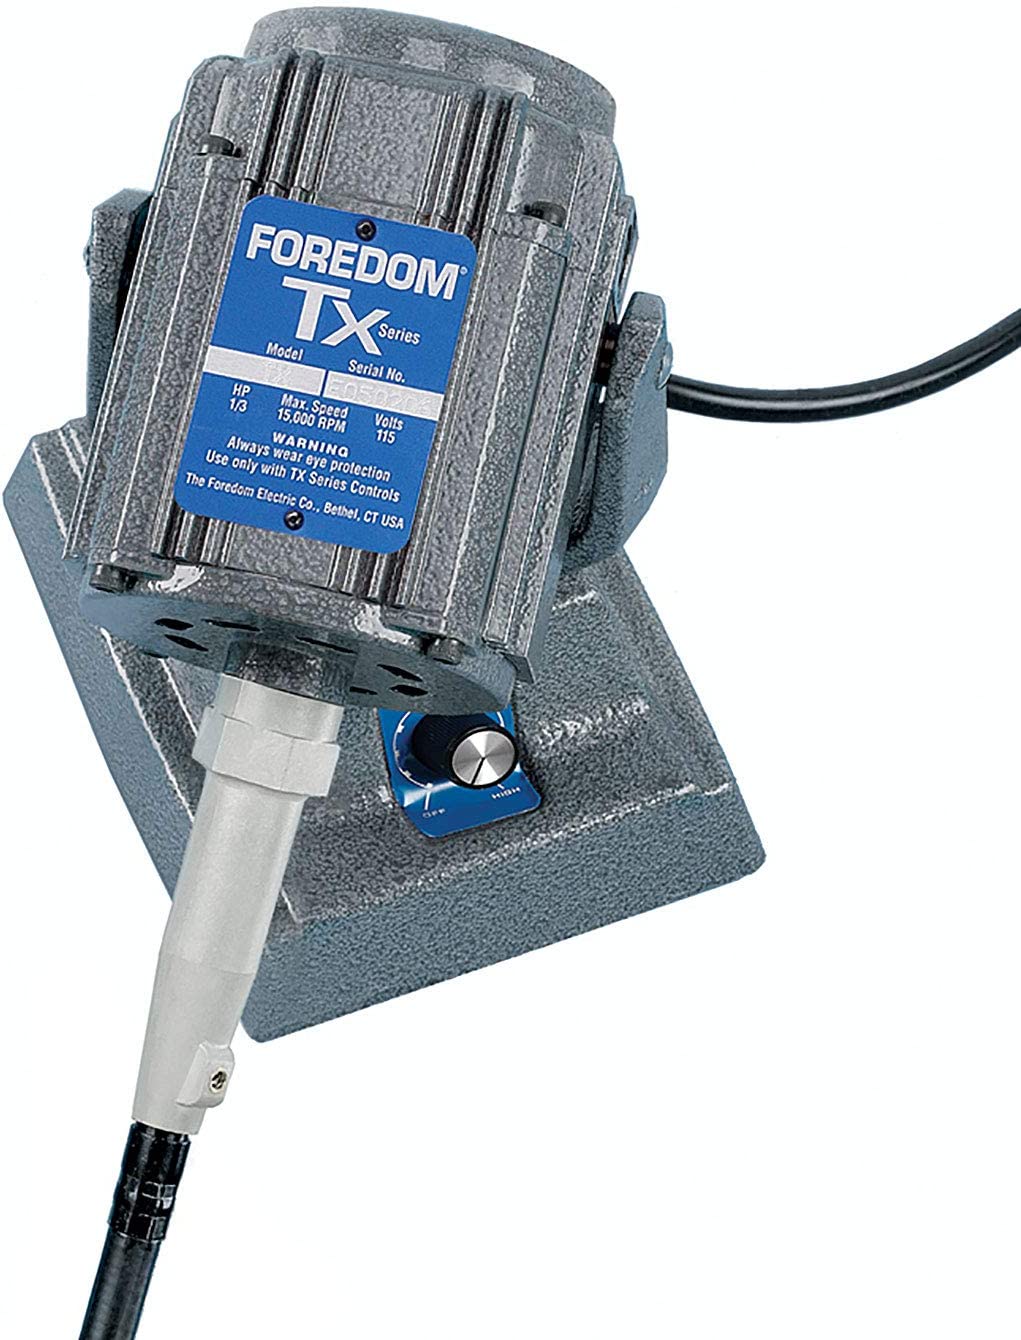 Foredom M.TXM Bench Top Flex Shaft Motor 1/3HP Built-in Dial Control High Torque